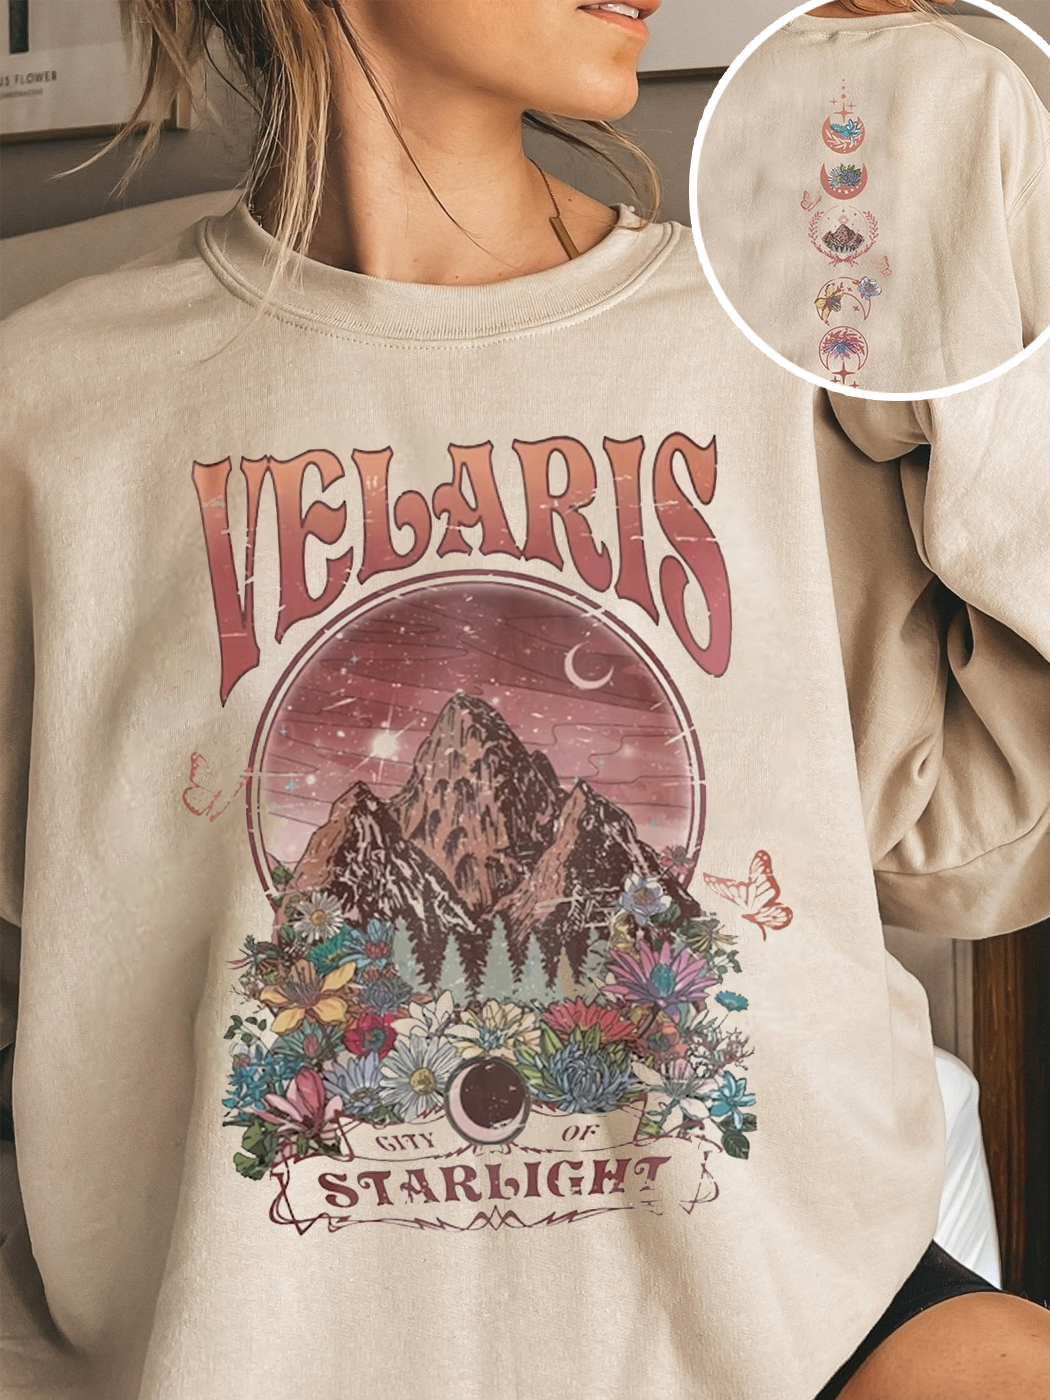 Velaris Sweatshirt Velaris City Of Starlight Sweatshirt / DarkAcademias /Darkacademias